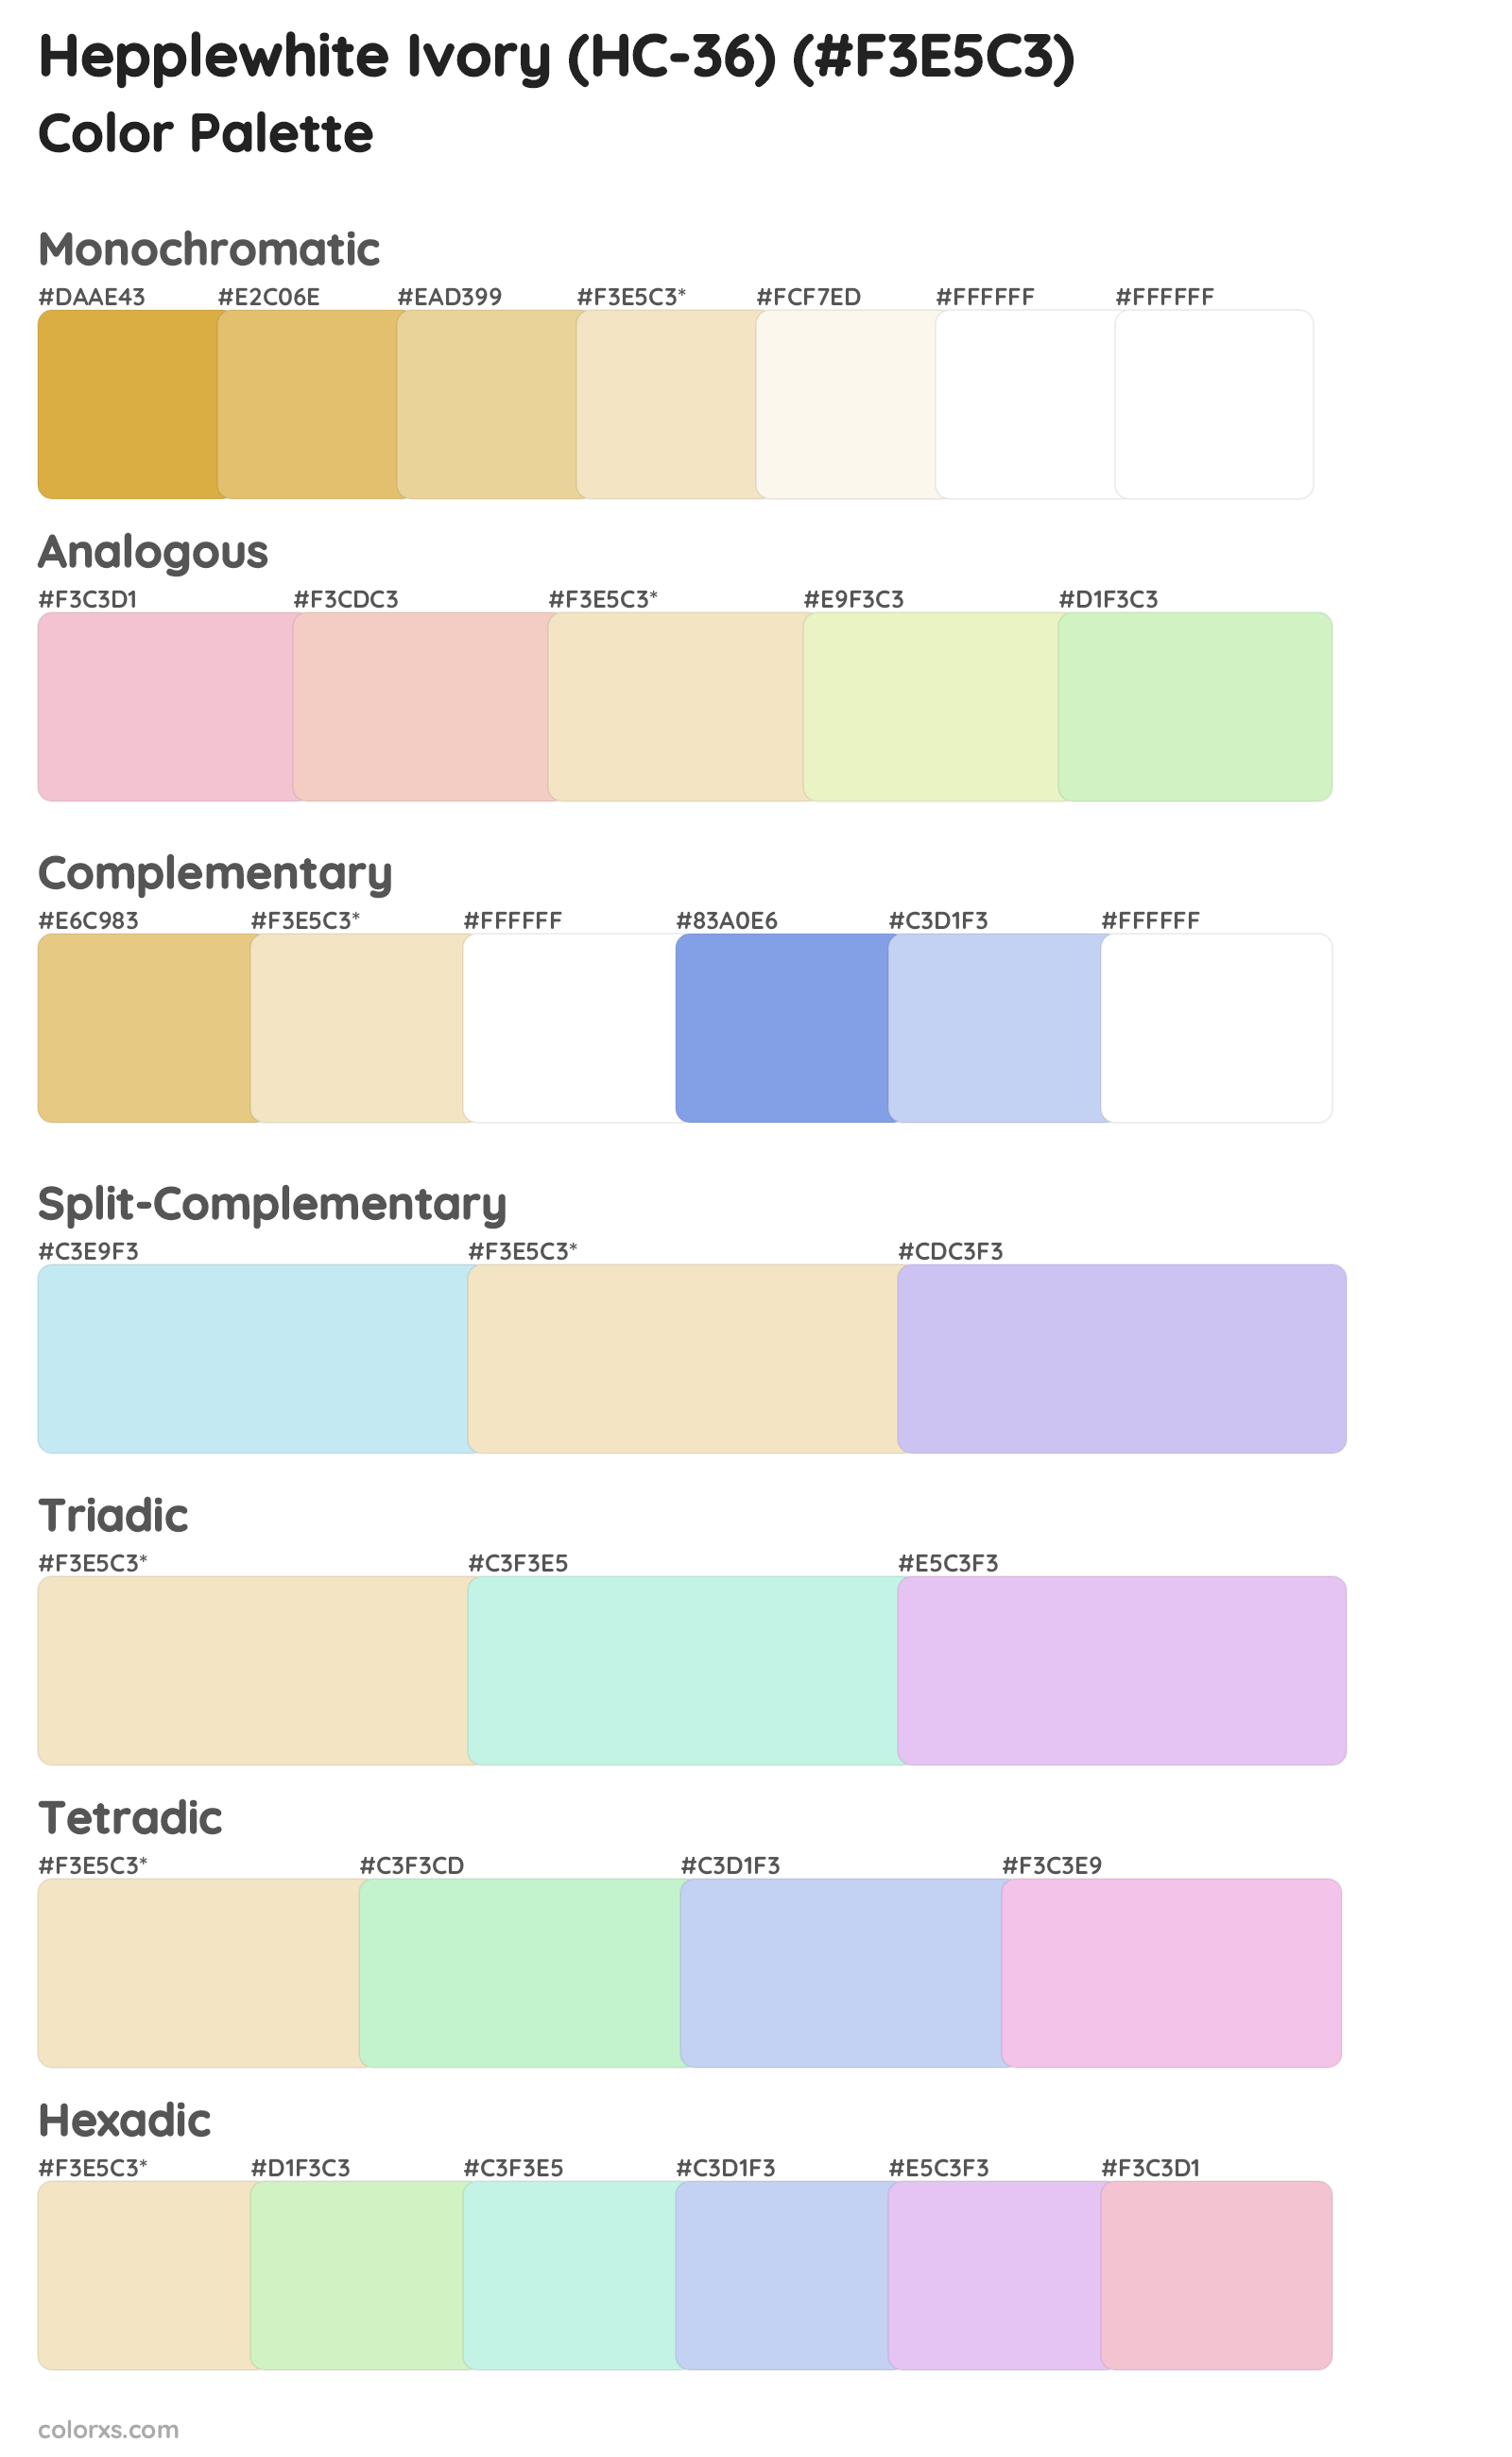 Hepplewhite Ivory (HC-36) Color Scheme Palettes